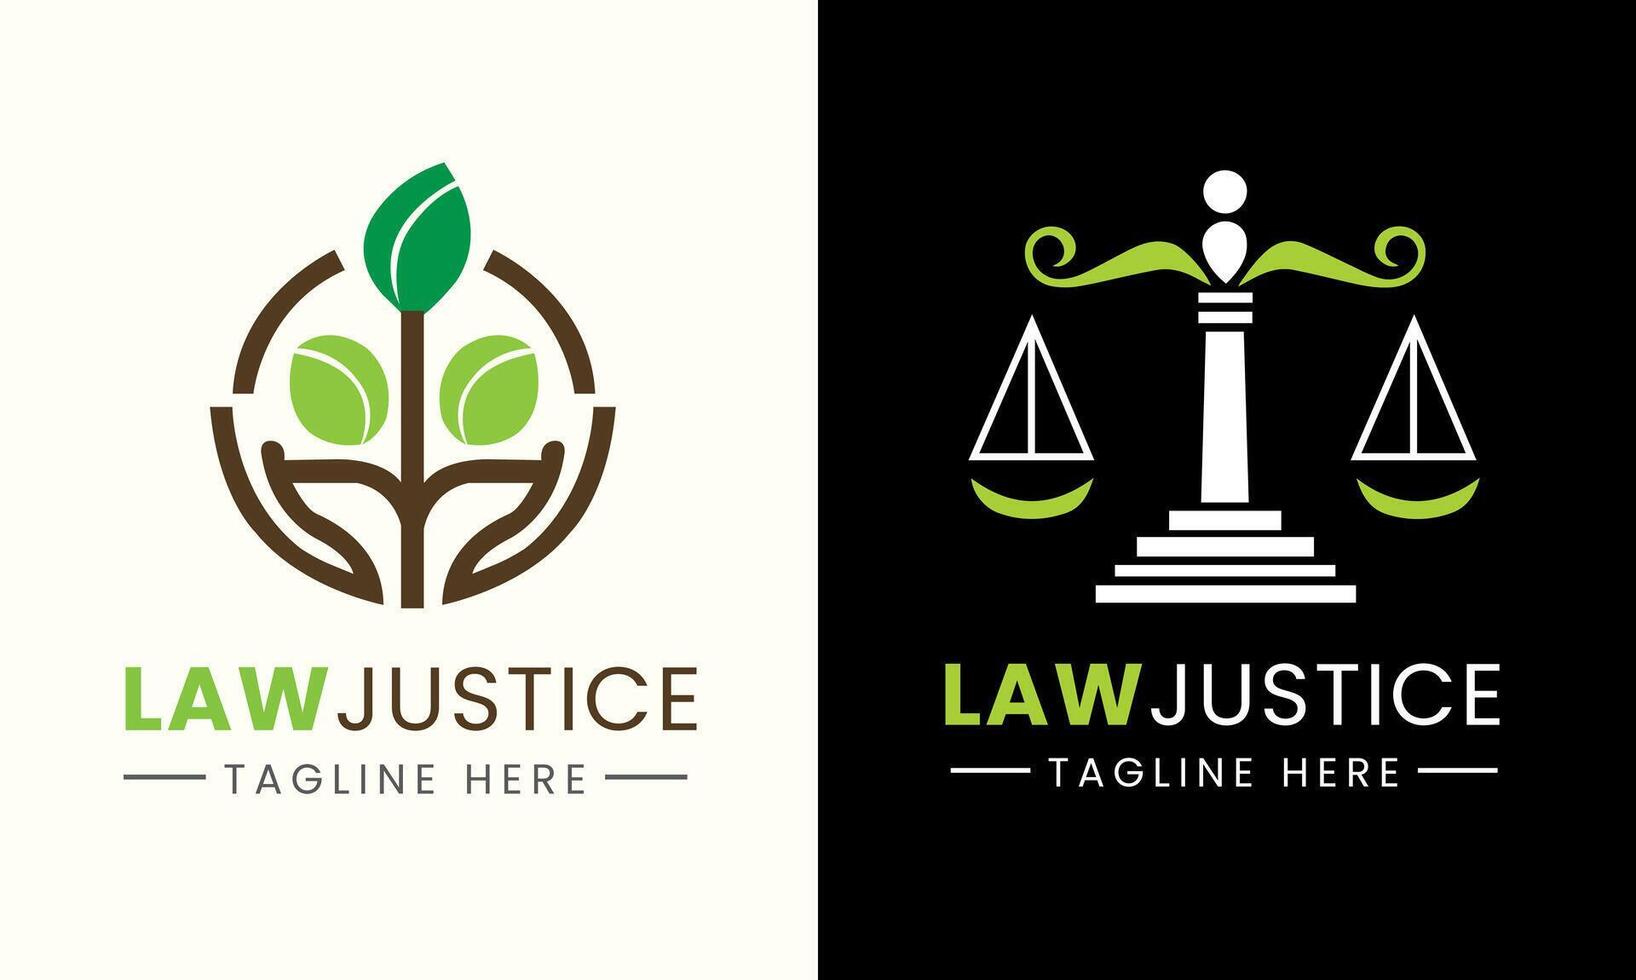 Law firm justice attorney judge court icon symbol logo design sample element vector